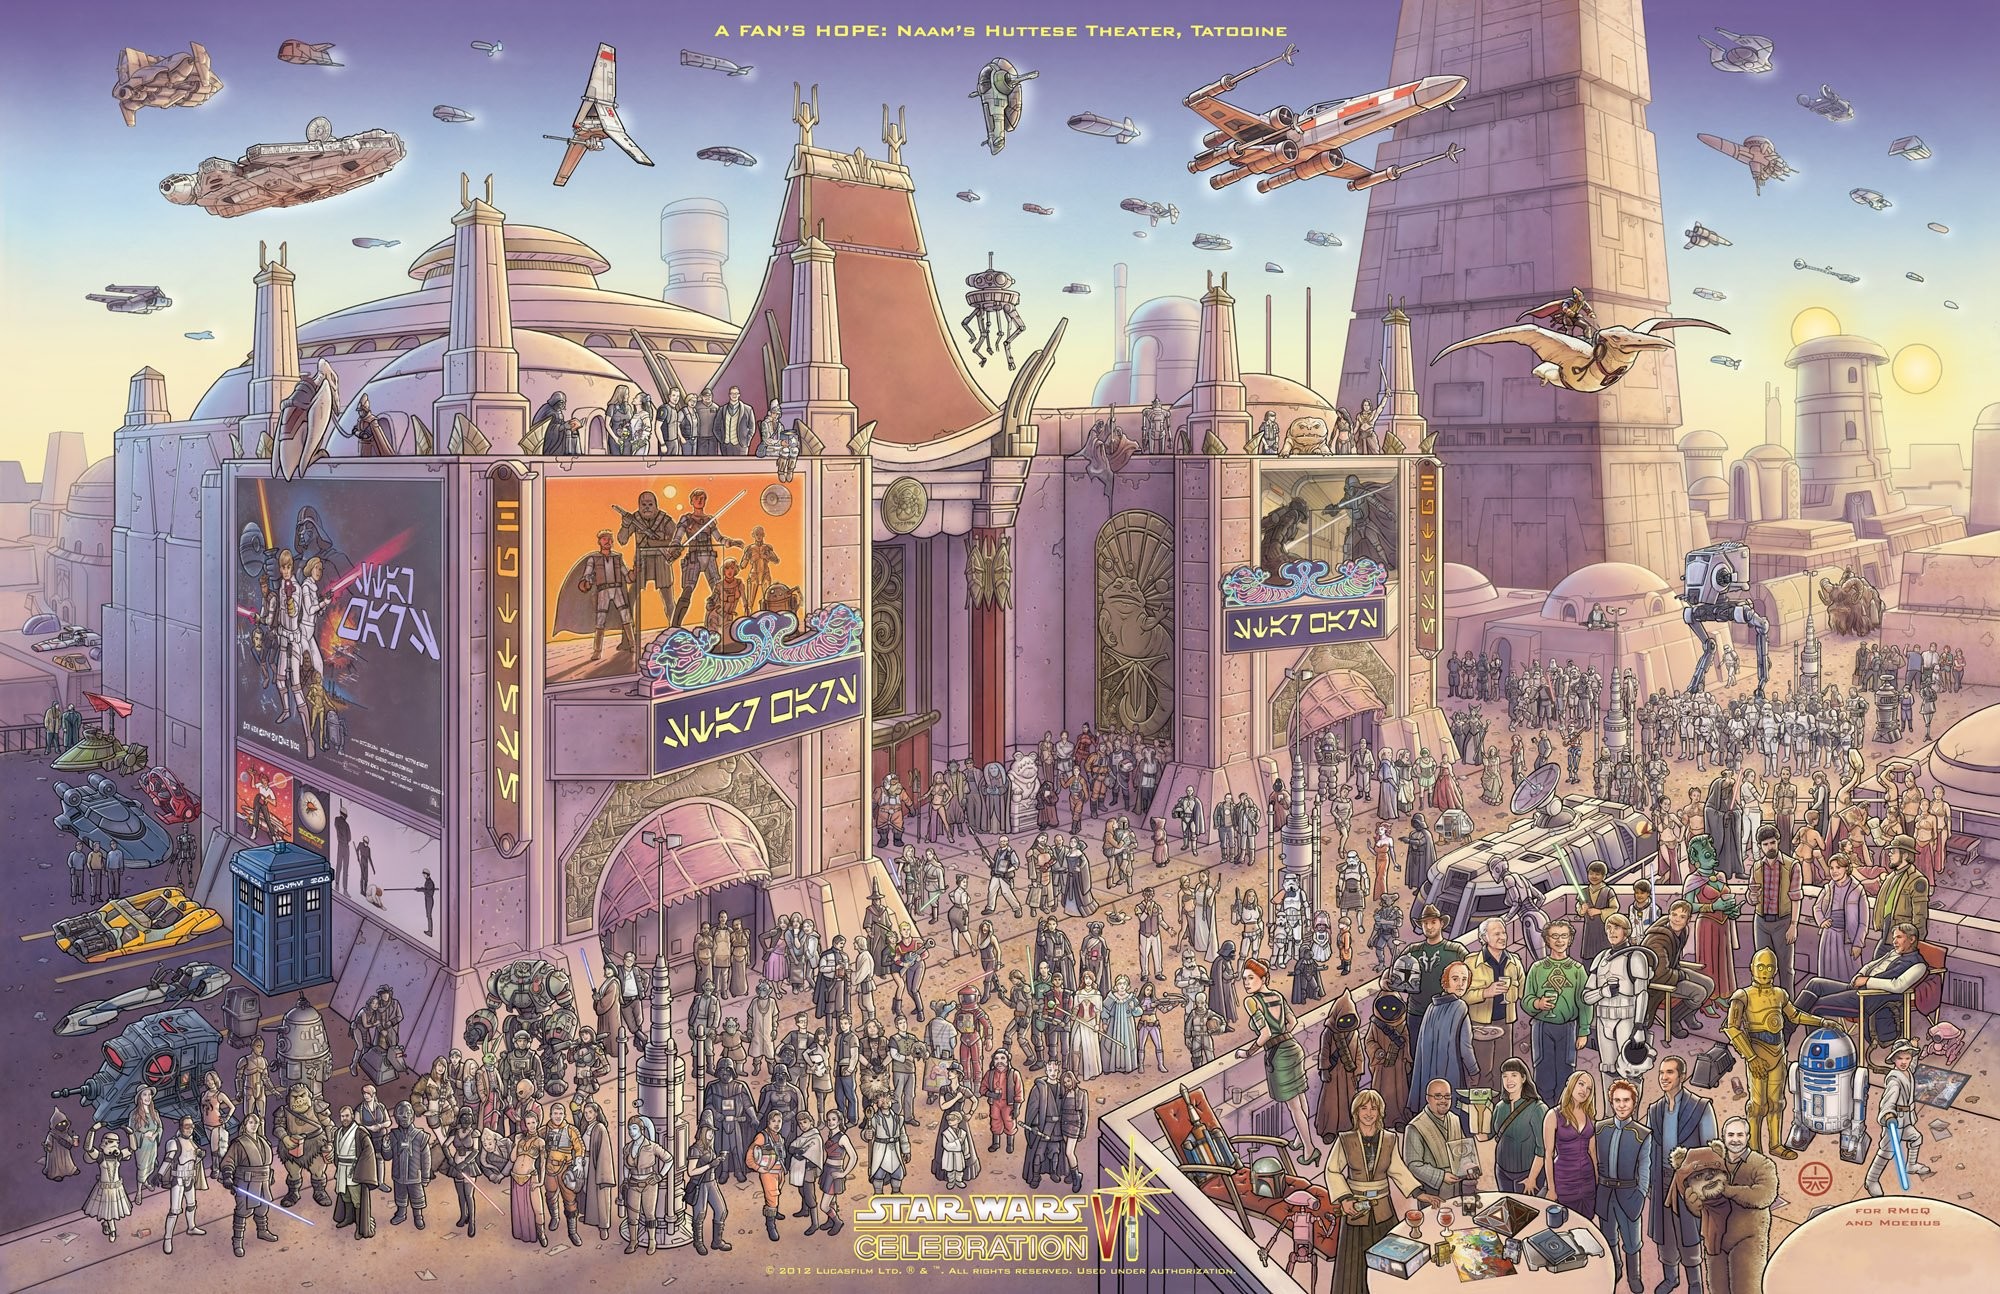 2000x1294 Star Wars Celebration VI Poster by Jeff Carlisle